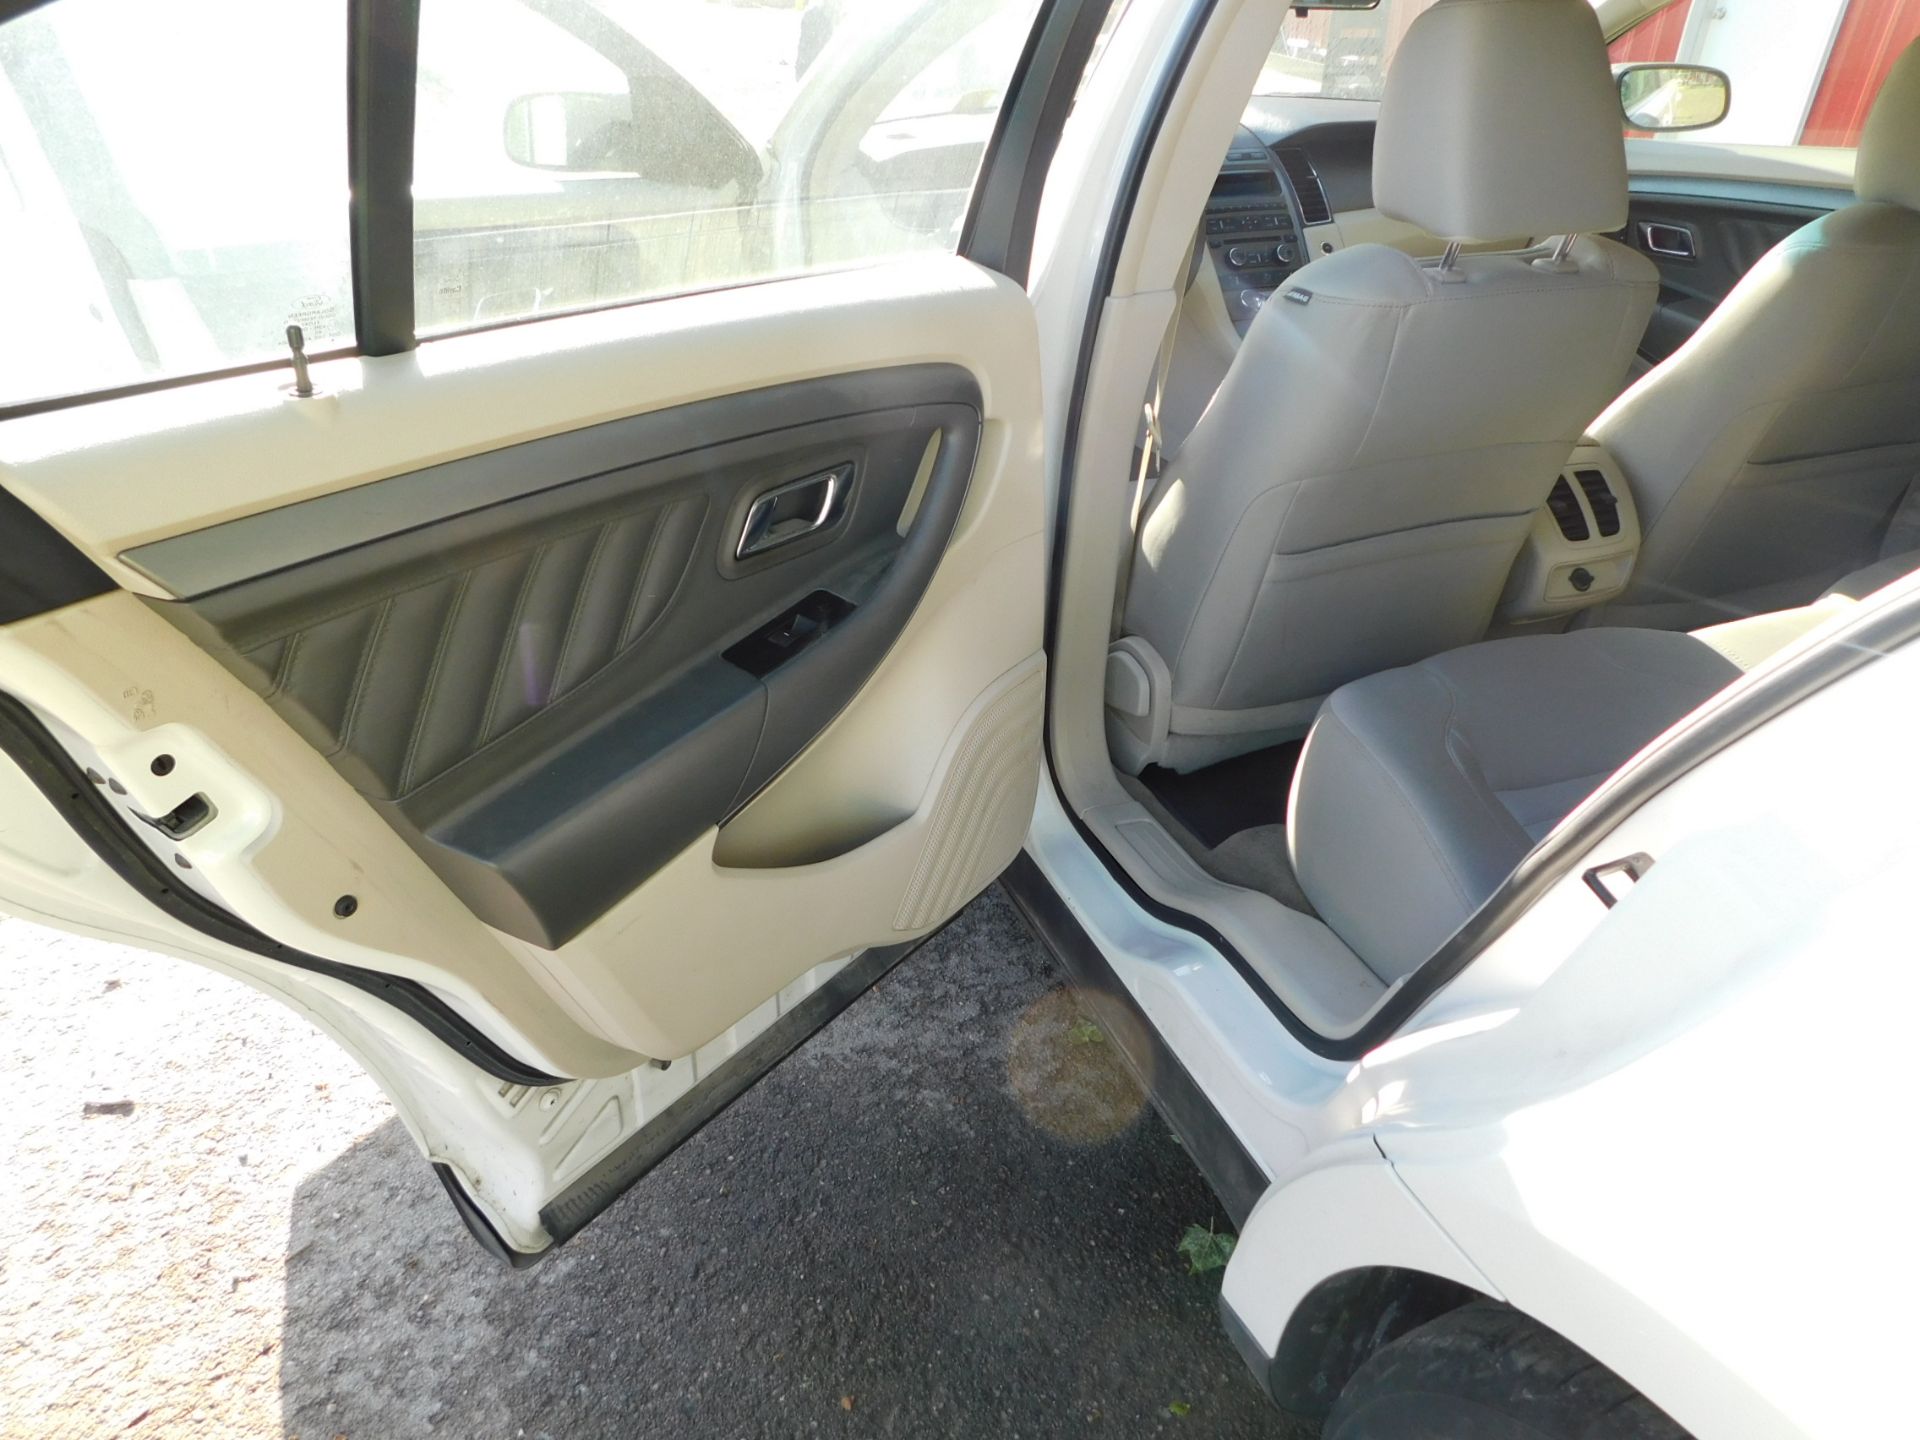 2011 Ford Taurus 4-Door Sedan vin 1FAHP2DWXBG163330, Automatic Transmission, PW,PL, AC, Cloth - Image 29 of 41